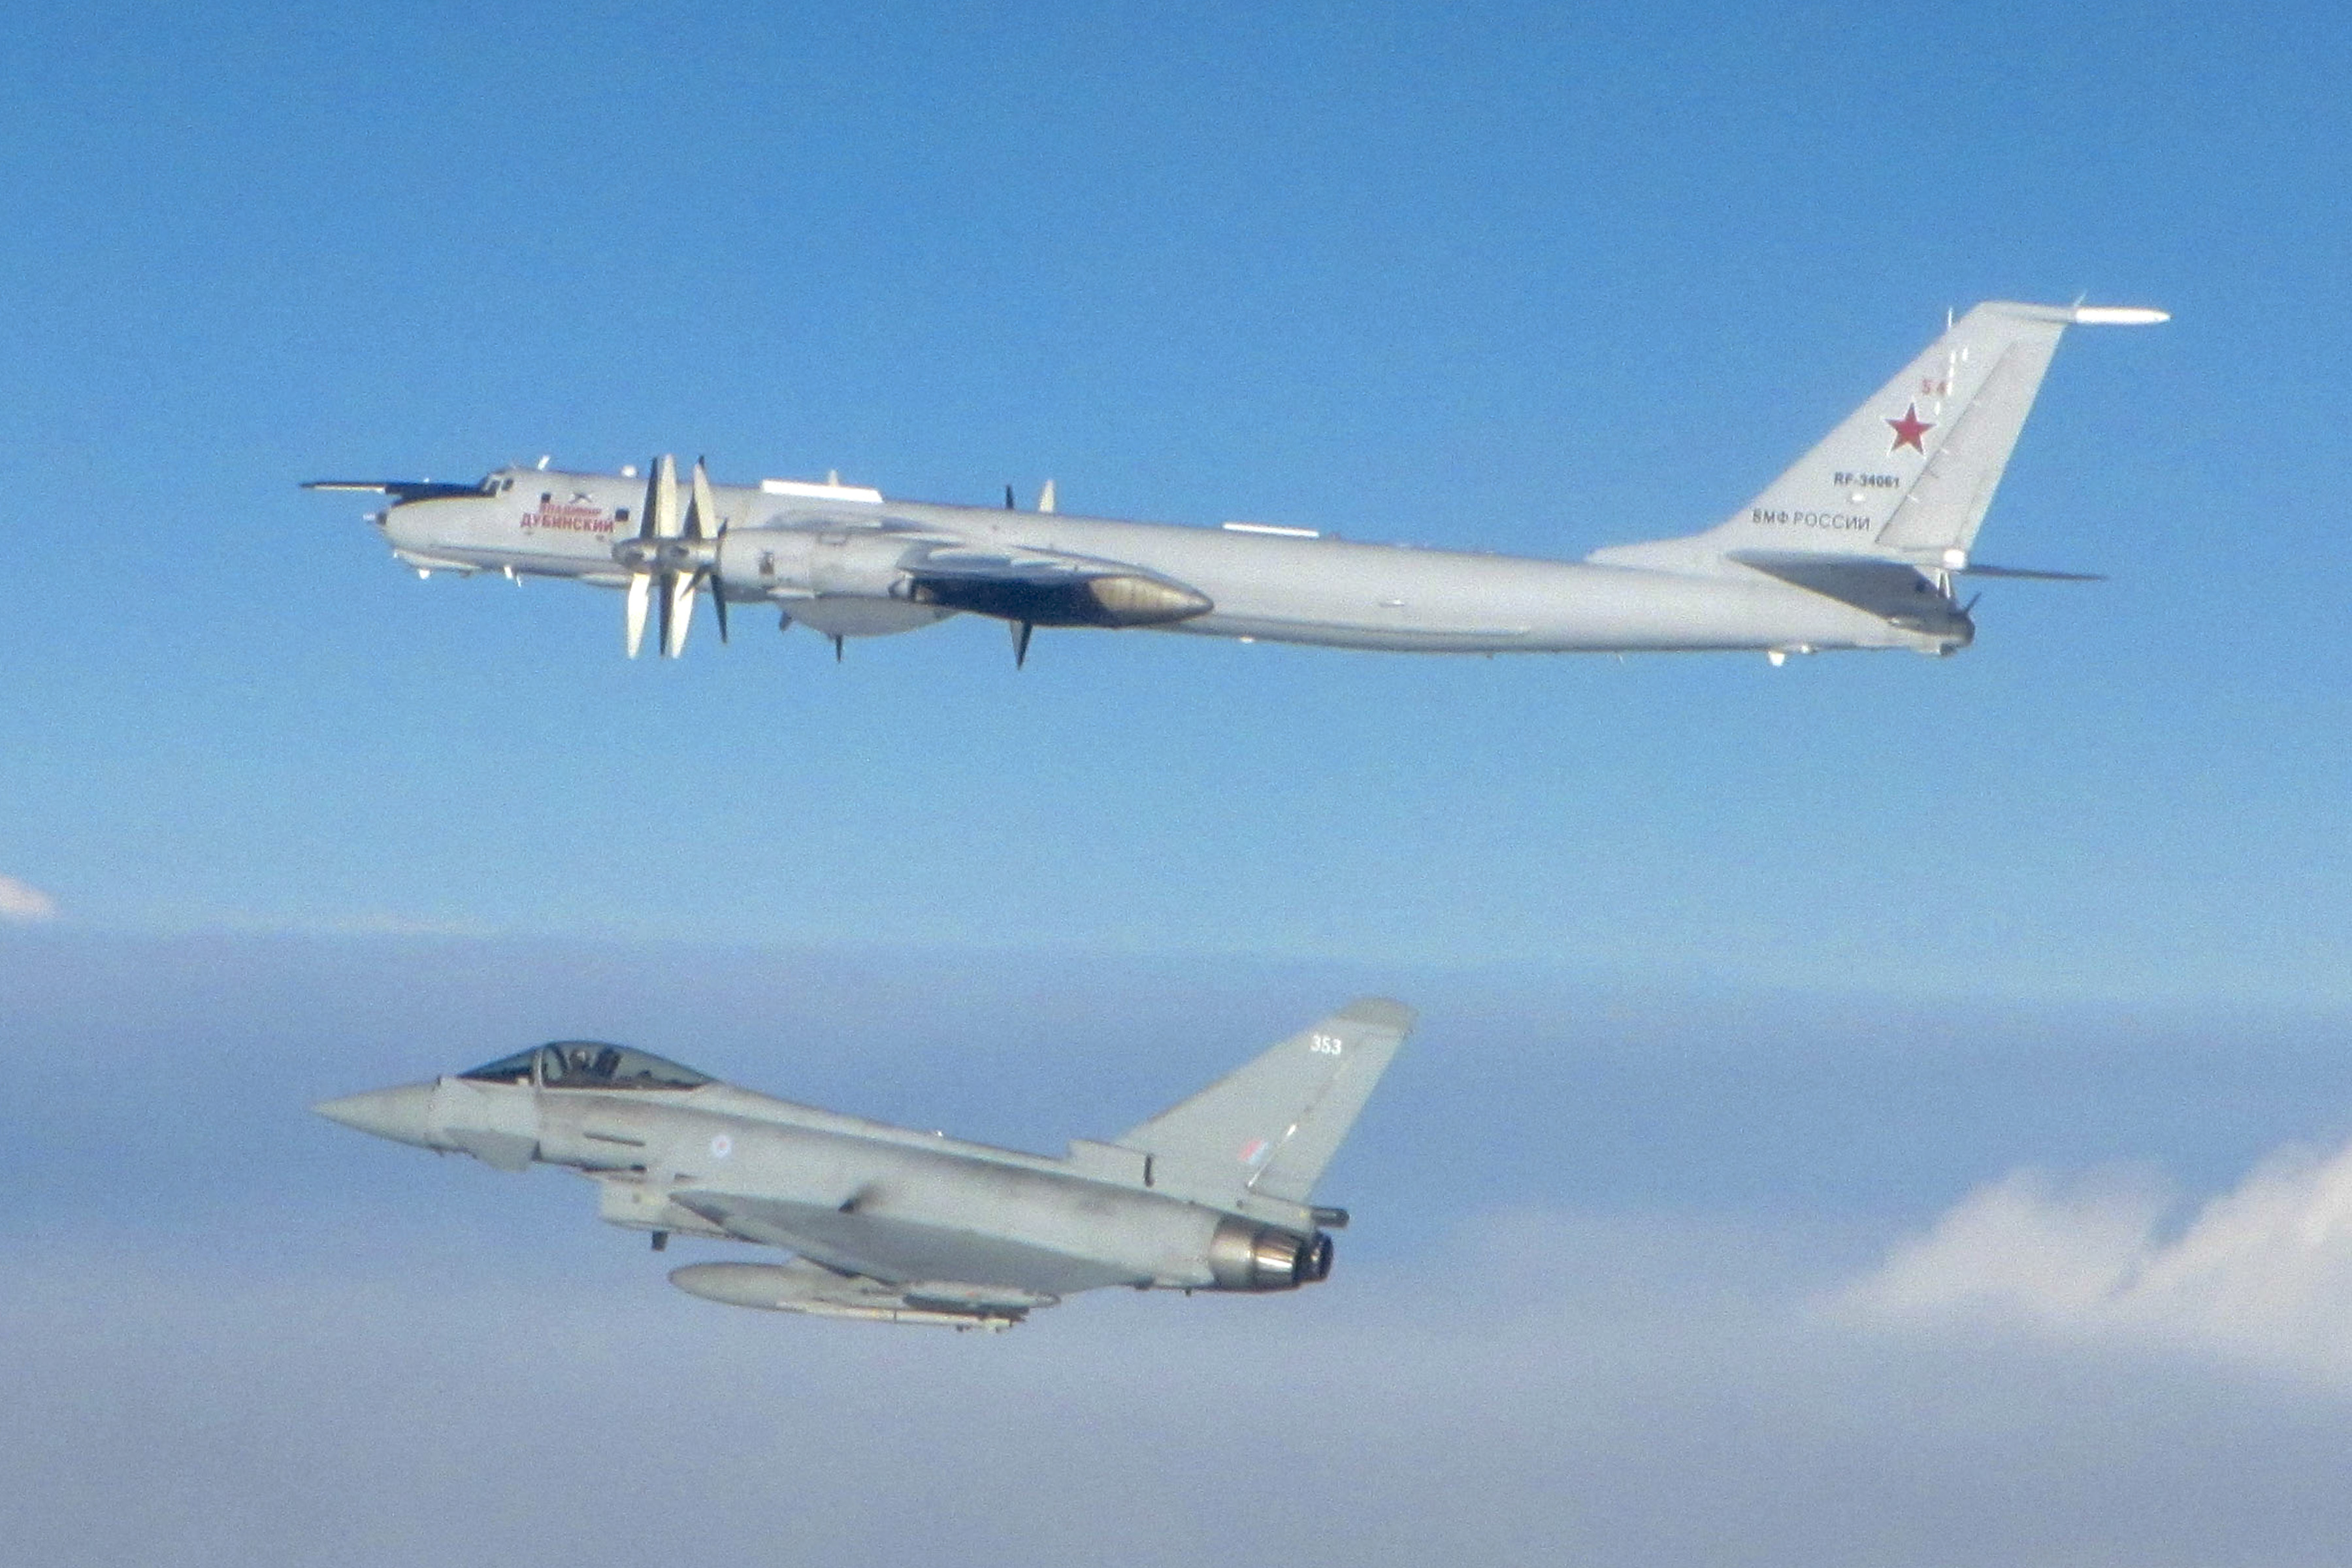 Royal Air Force Intercepts Russian Aircraft Three Times in Six Days